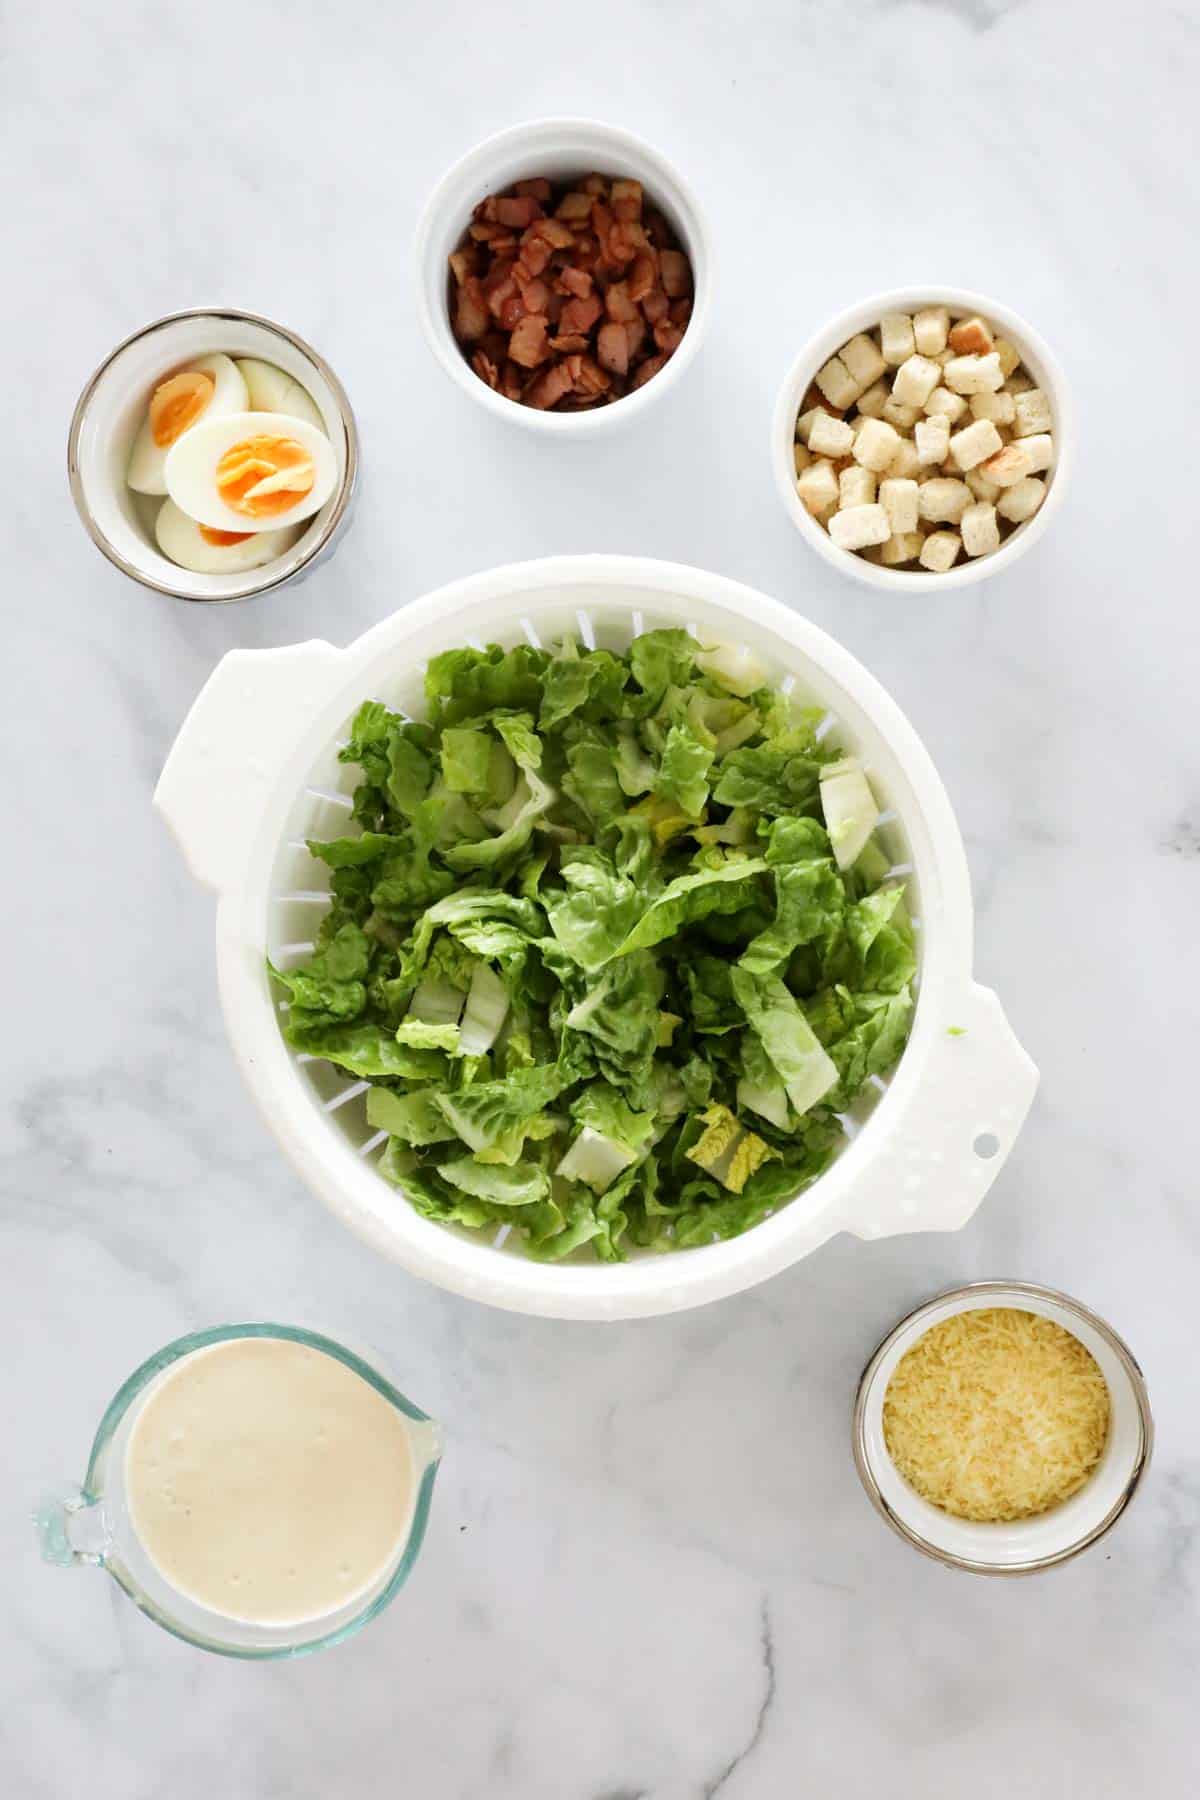 Ingredients for making caesar salad in bowls.